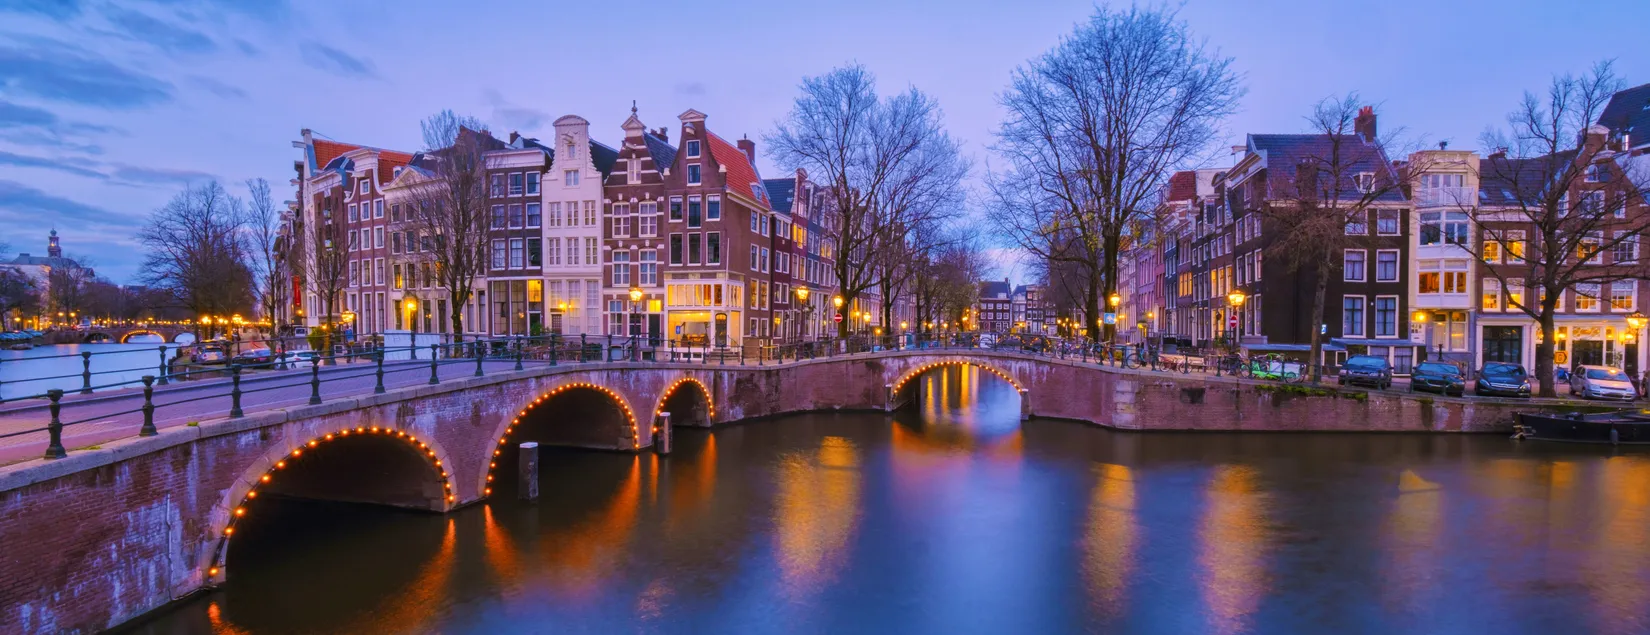 Les canaux d'Amsterdam en hiver ©  iStock / Chirapriya Thanakonwirakit